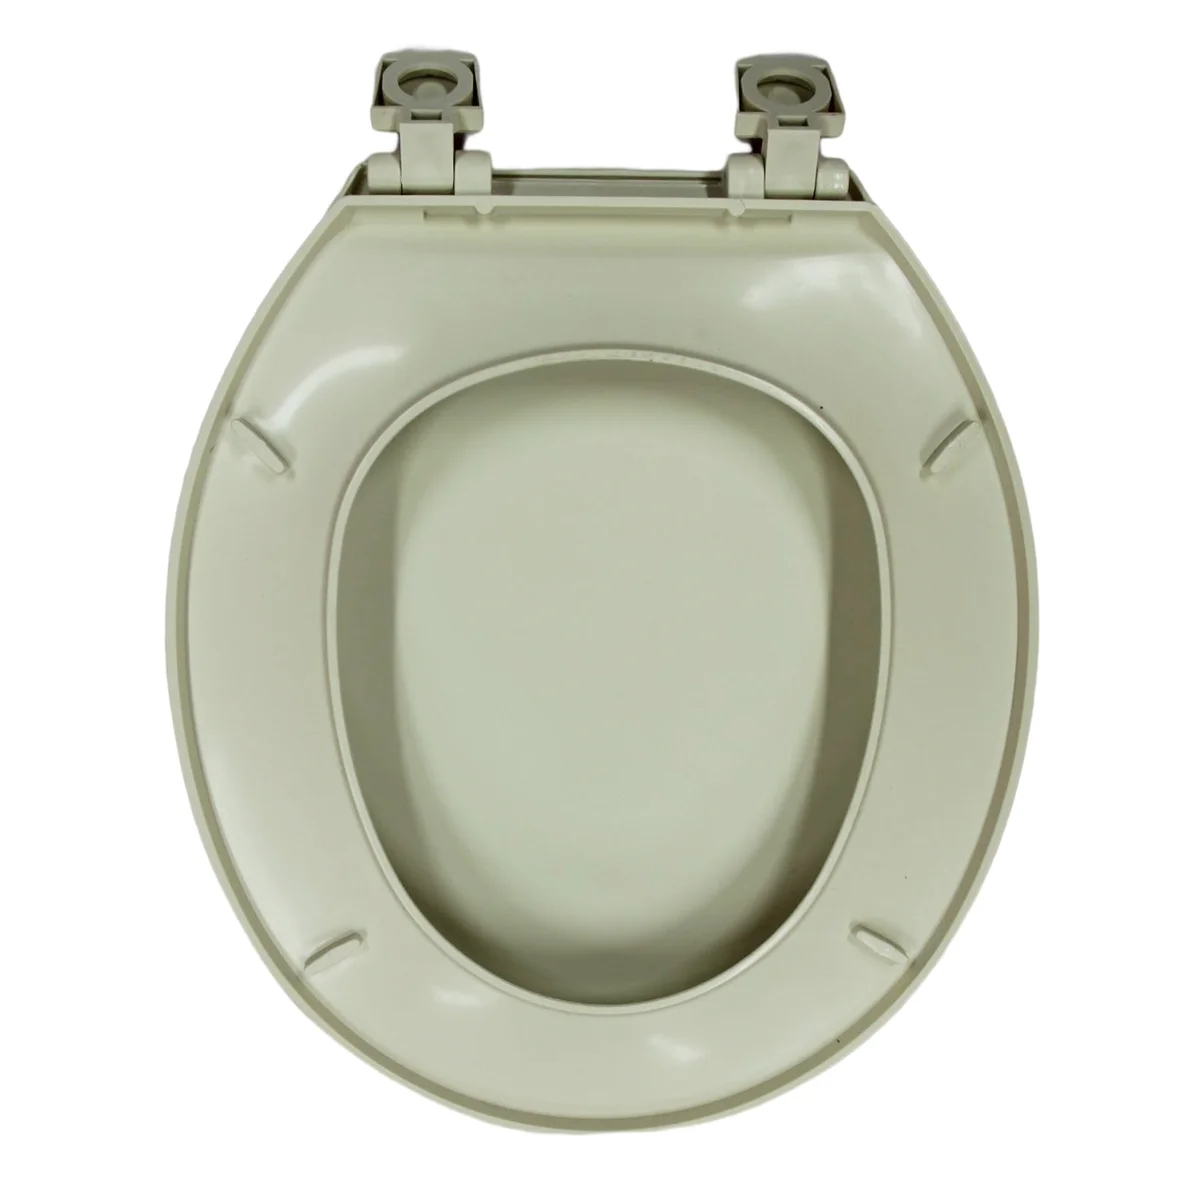 J&V Textiles Elongated Toilet Seat With Easy Clean & Change Hinge, Beveled Edges (Beige)